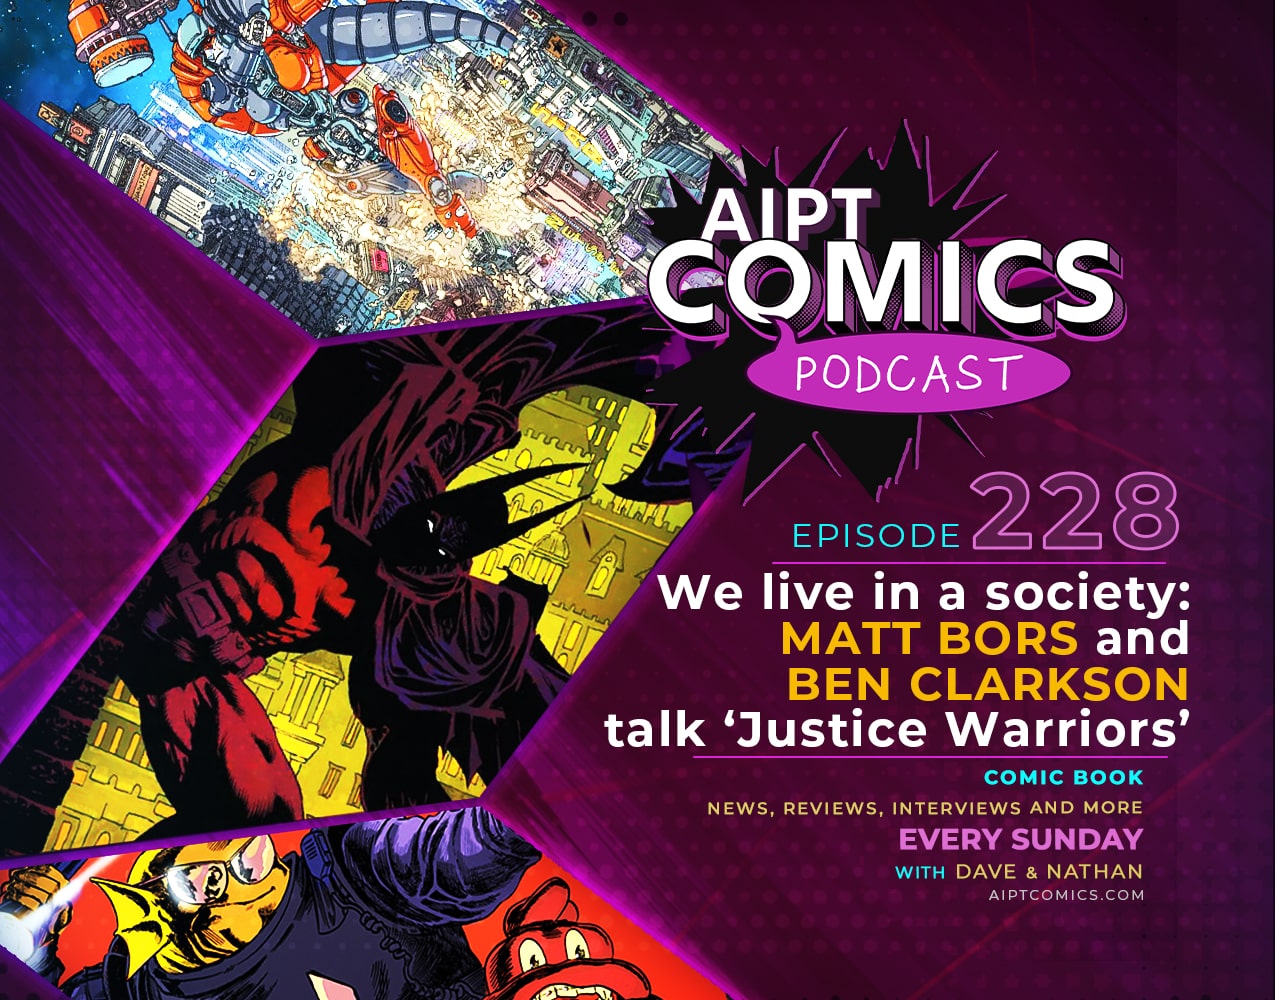 AIPT Comics Podcast episode 228: We live in a society: Matt Bors, Ben Clarkson talk ‘Justice Warriors’